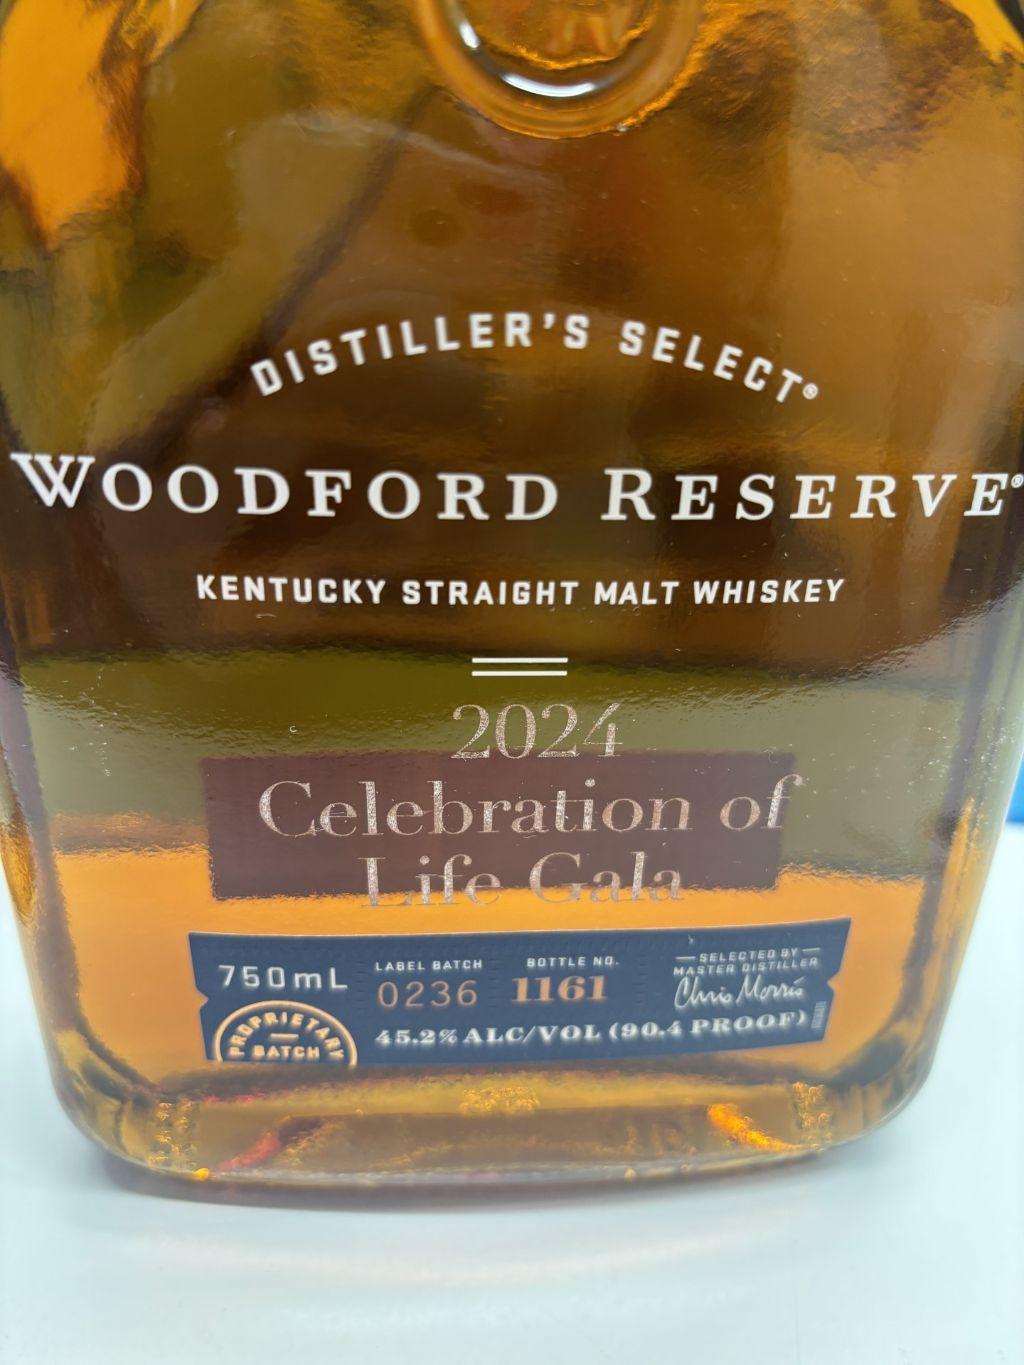 Bottle of Woodford Reserve